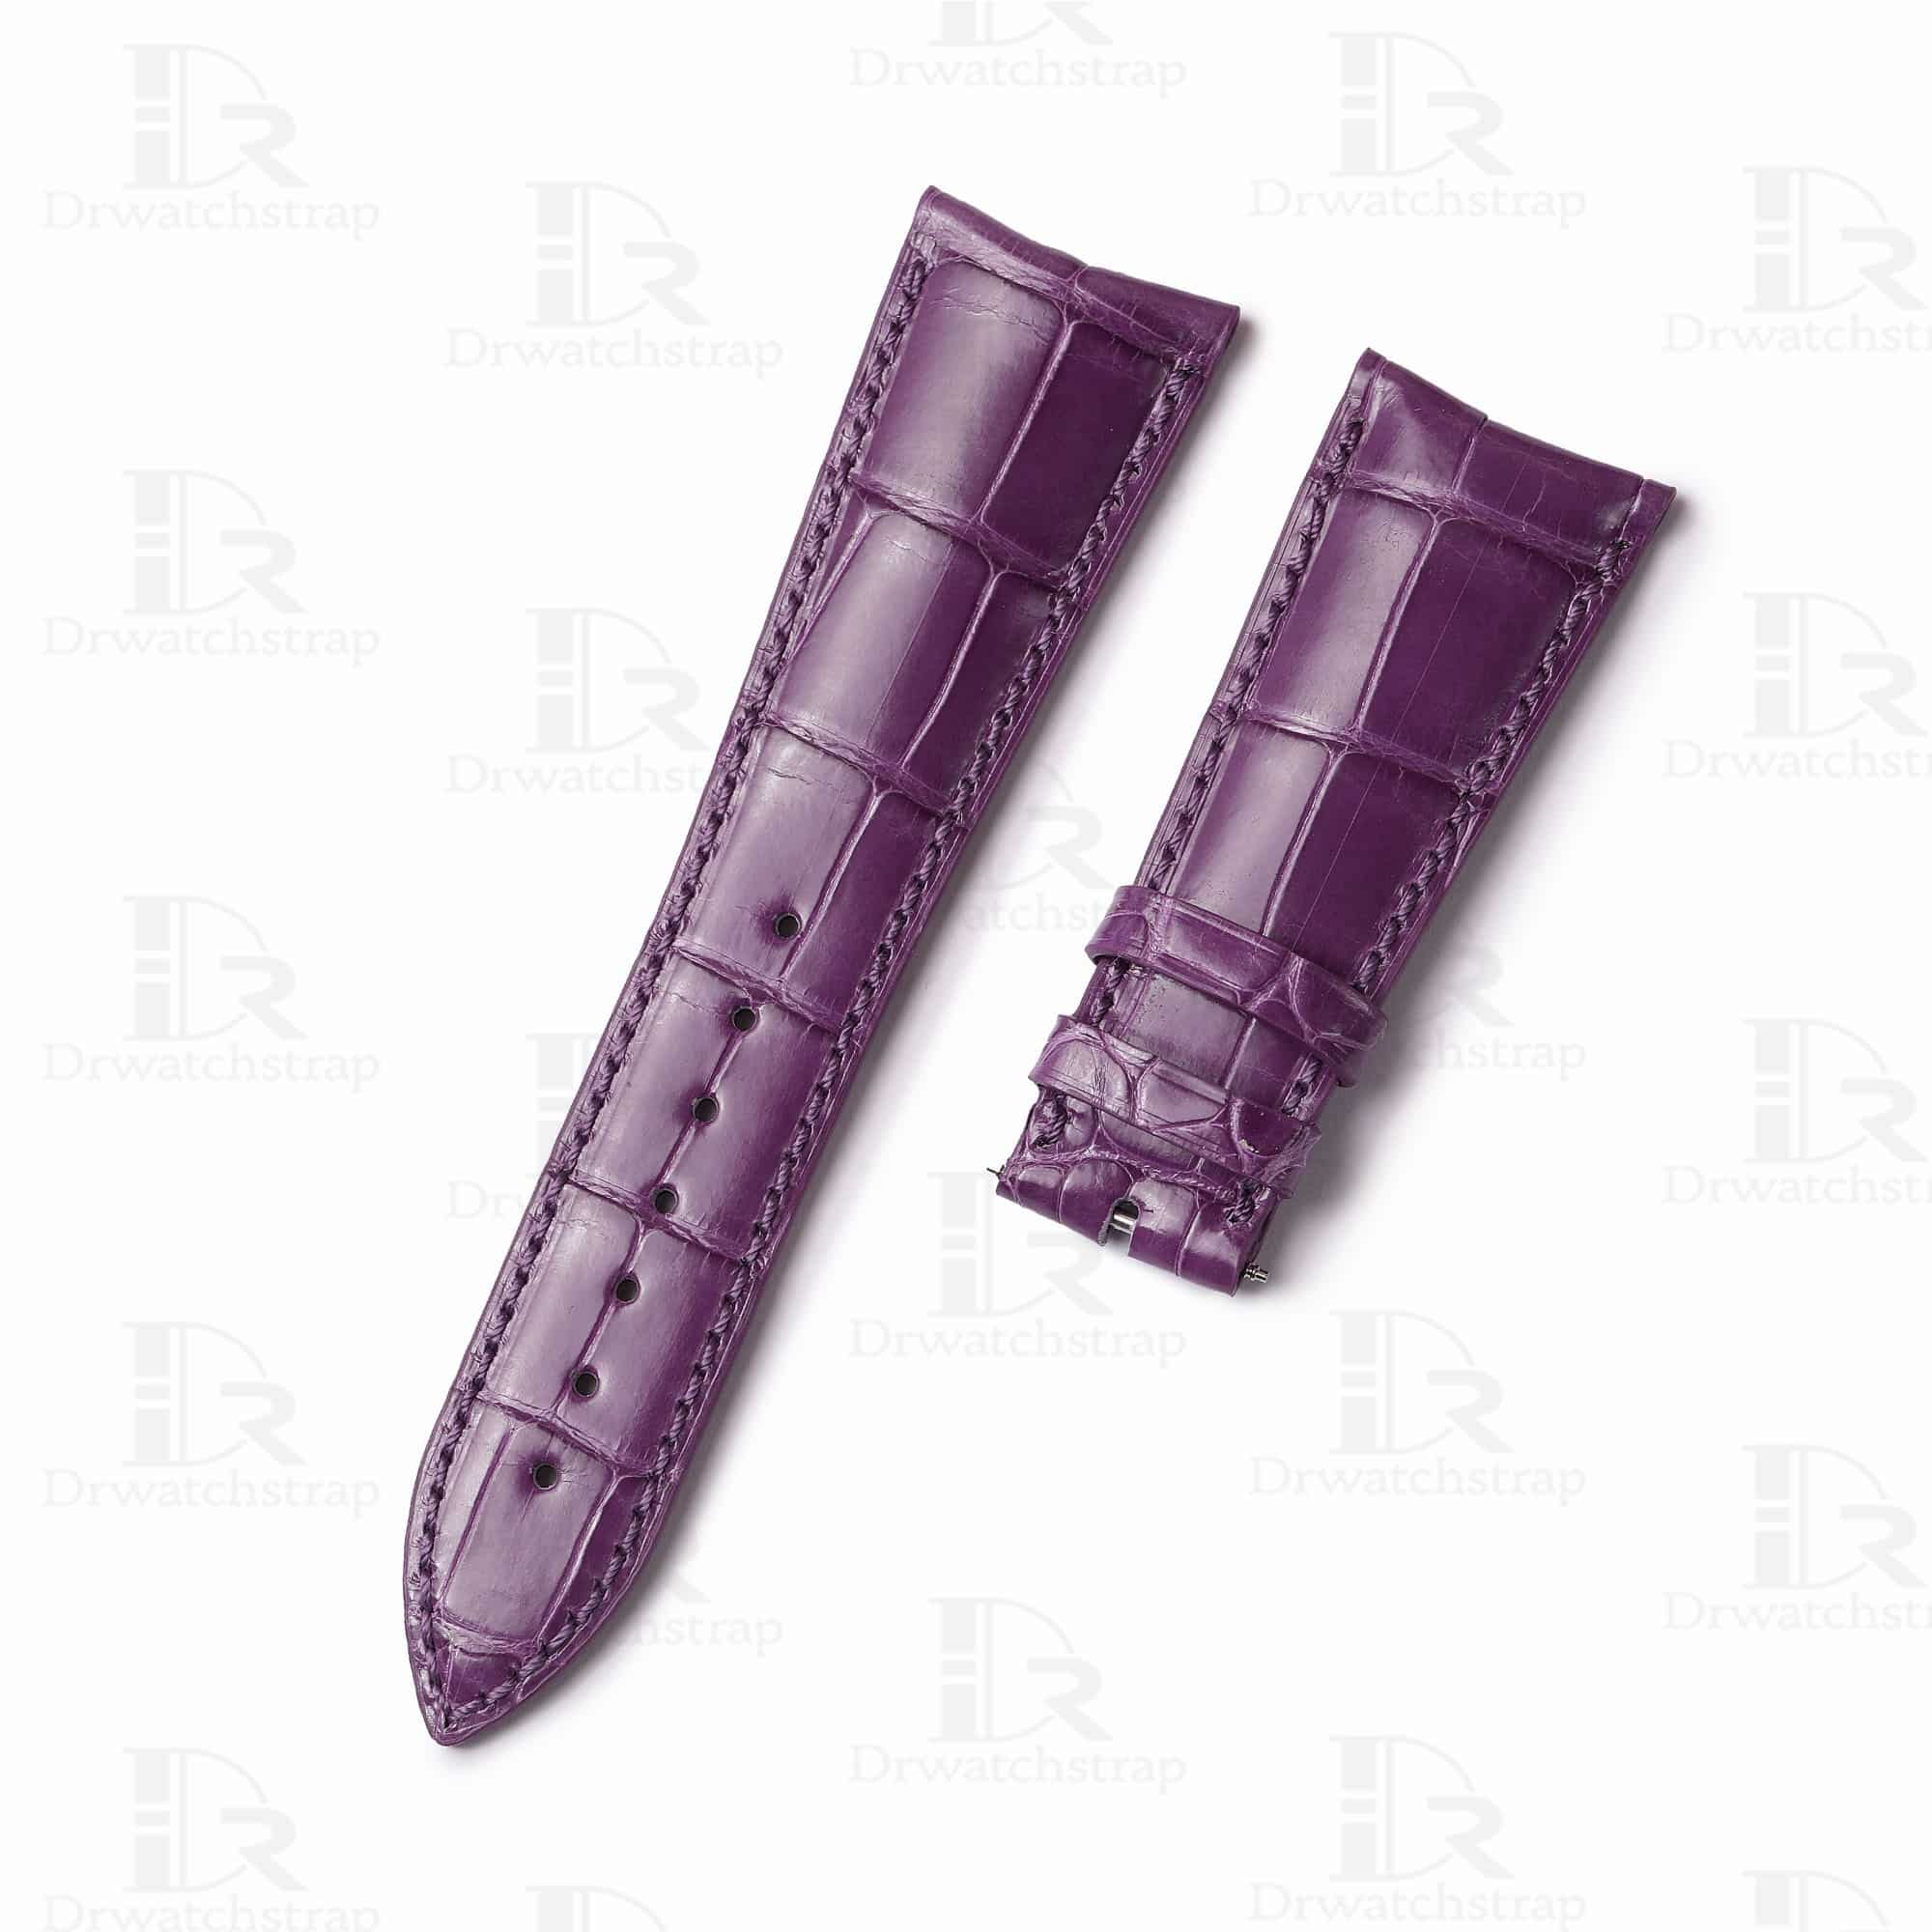 Curved End custom Alligator purple leather watchband for Audemars Piguet Millenary strap